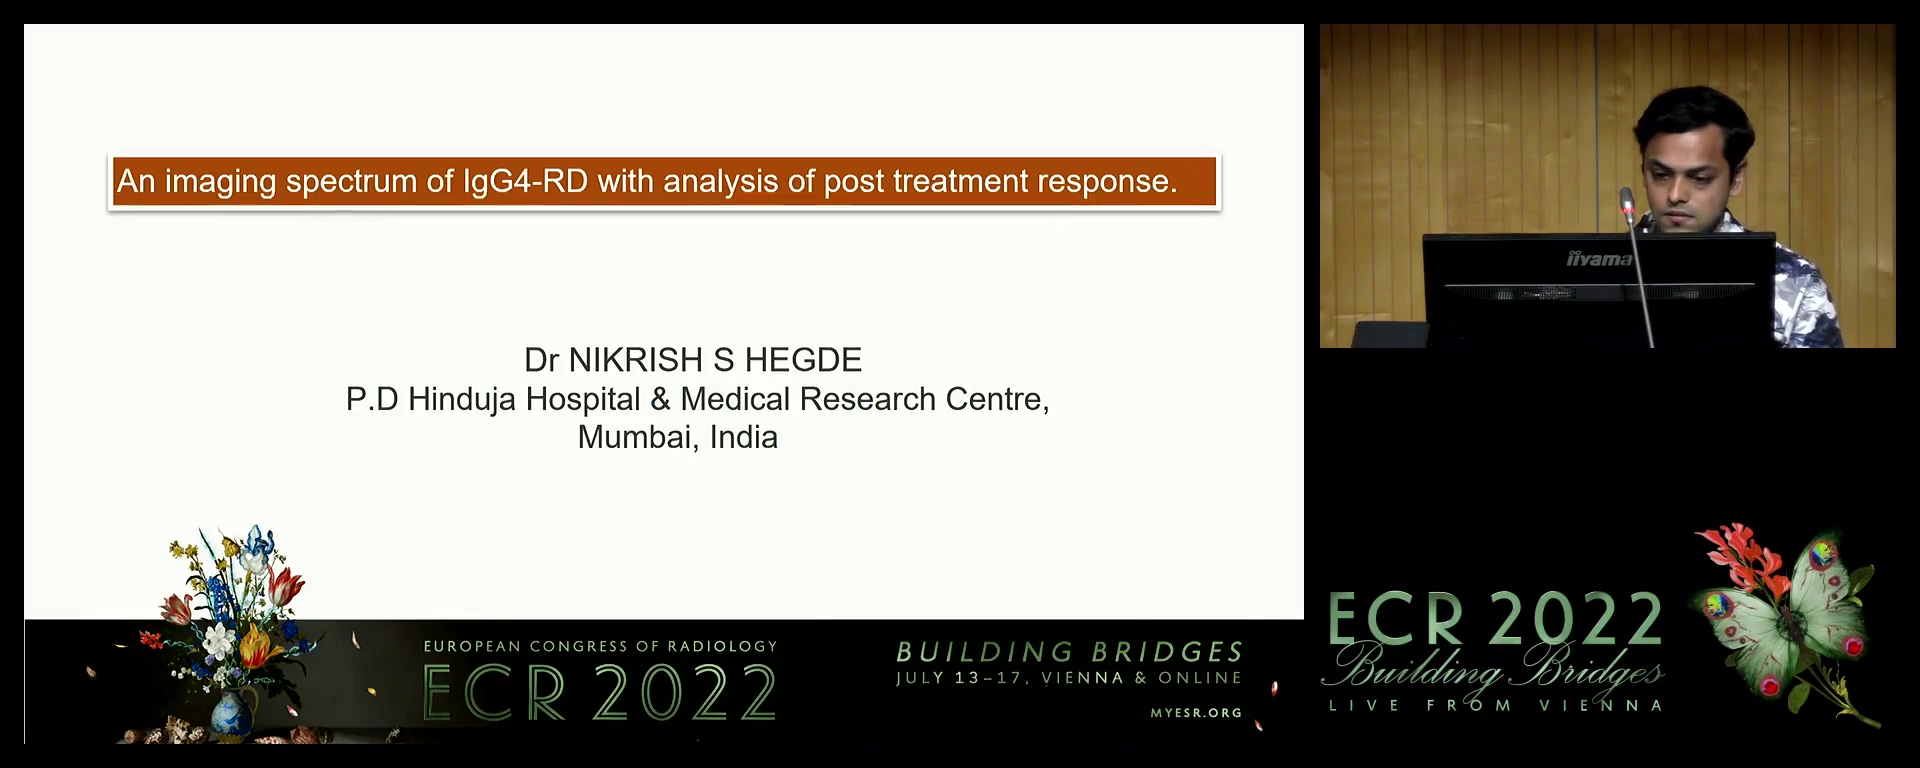 An imaging spectrum of IgG4-RD with analysis of post-treatment imaging response - Nikrish Hegde, Mumbai / IN